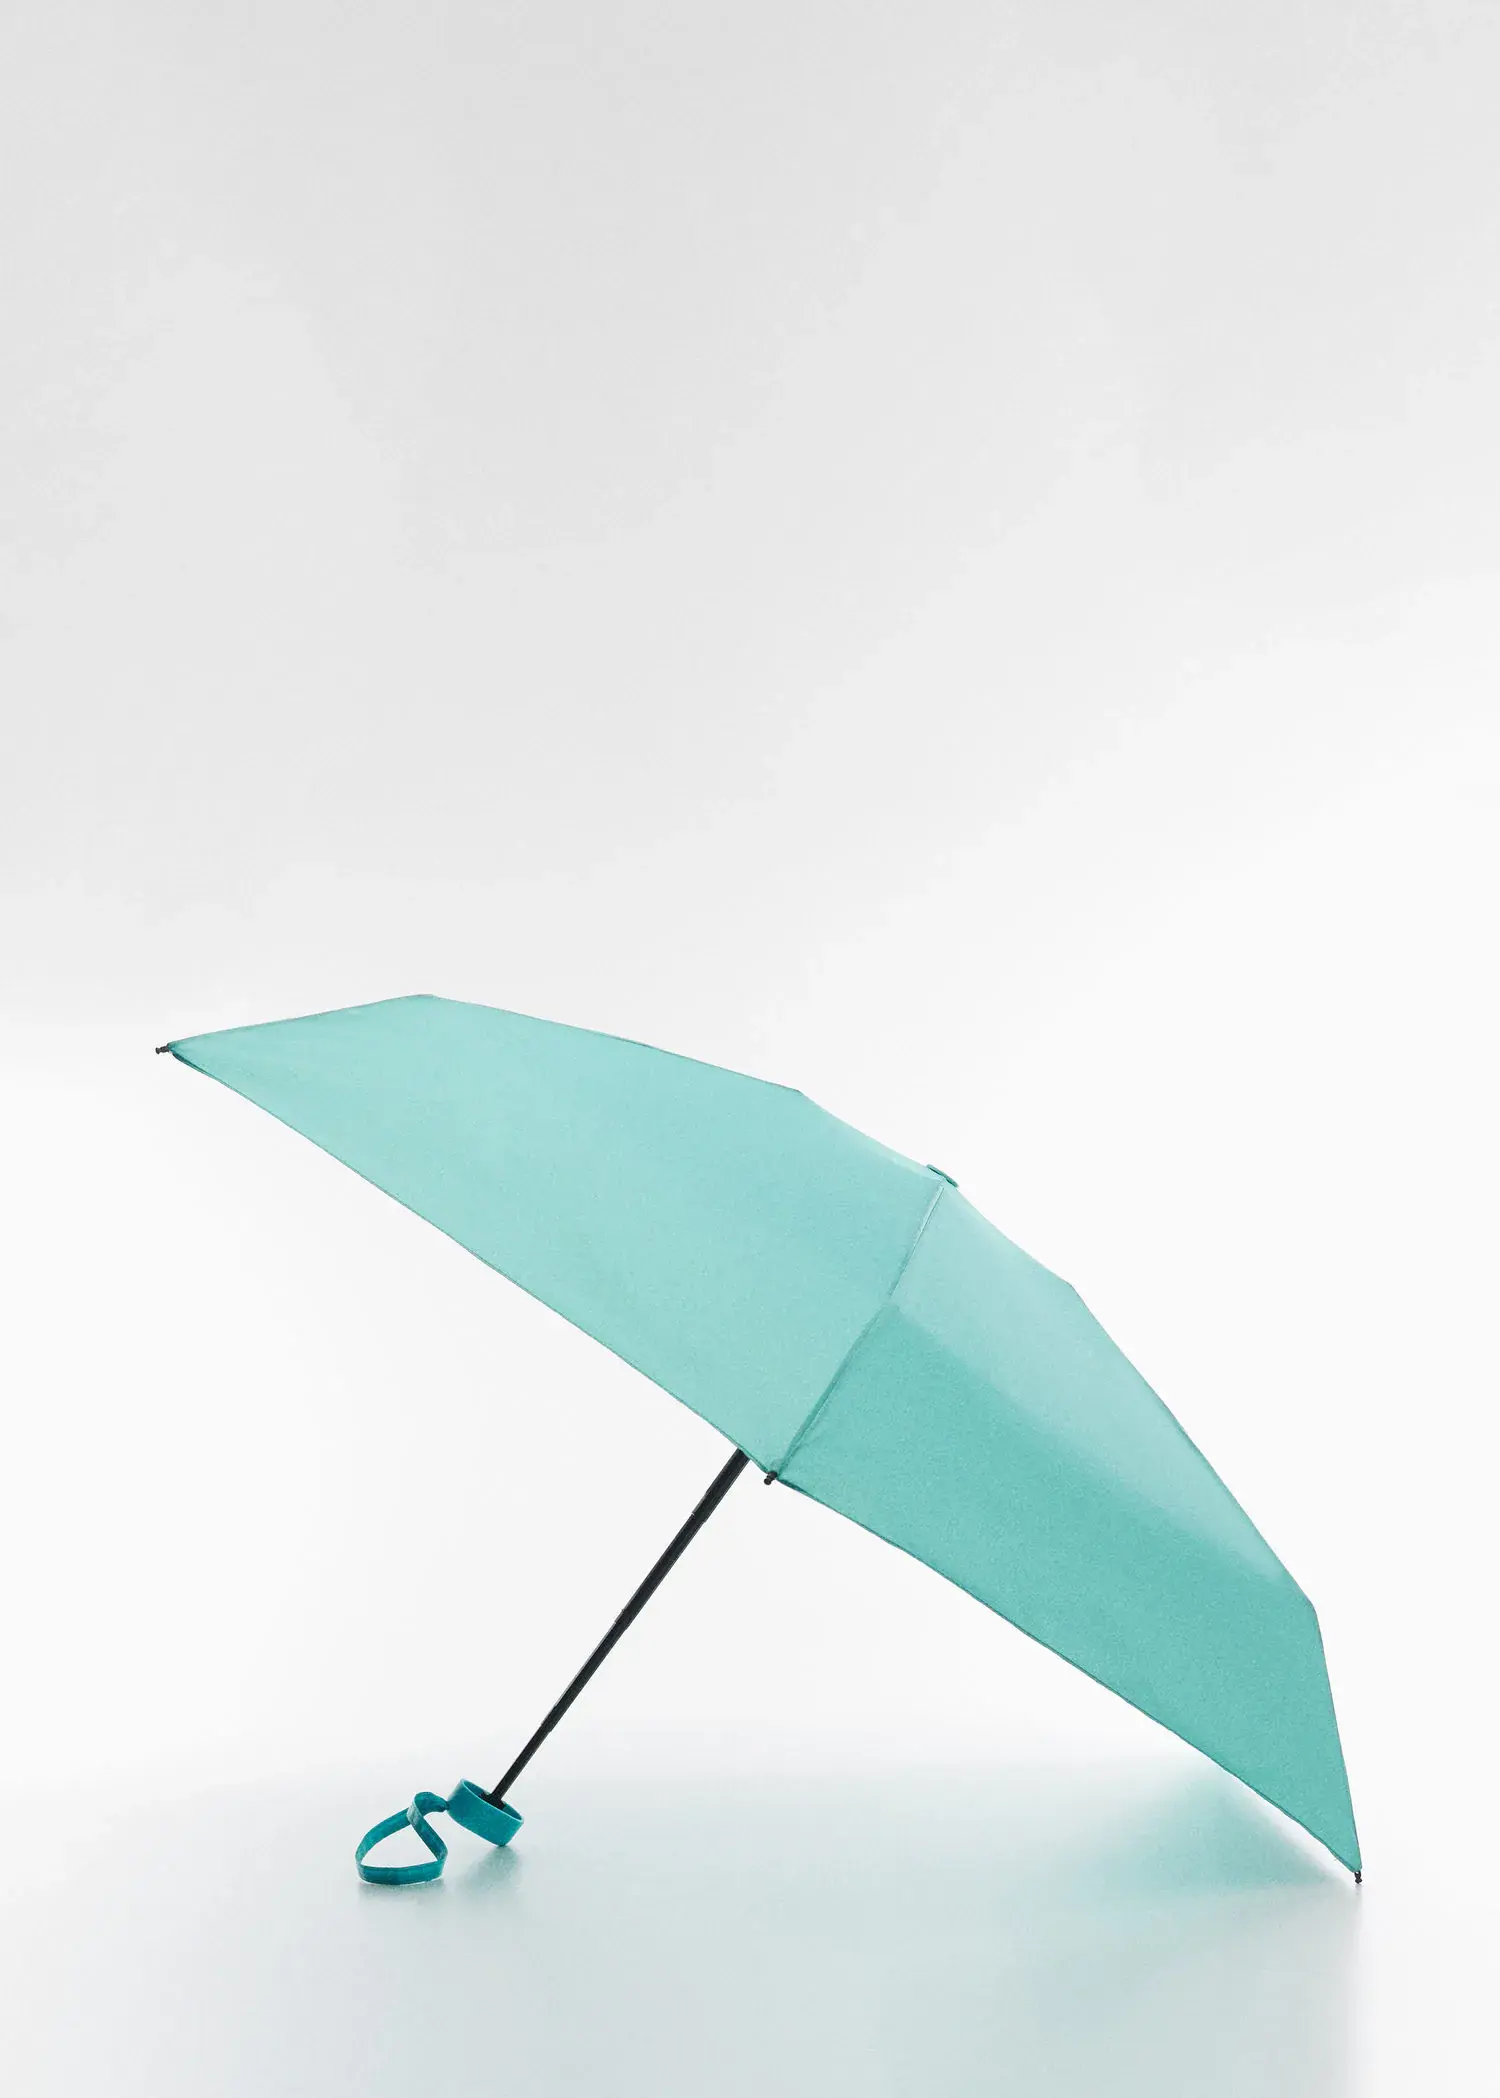 Mango Mini folding umbrella. an open umbrella is shown in the air. 